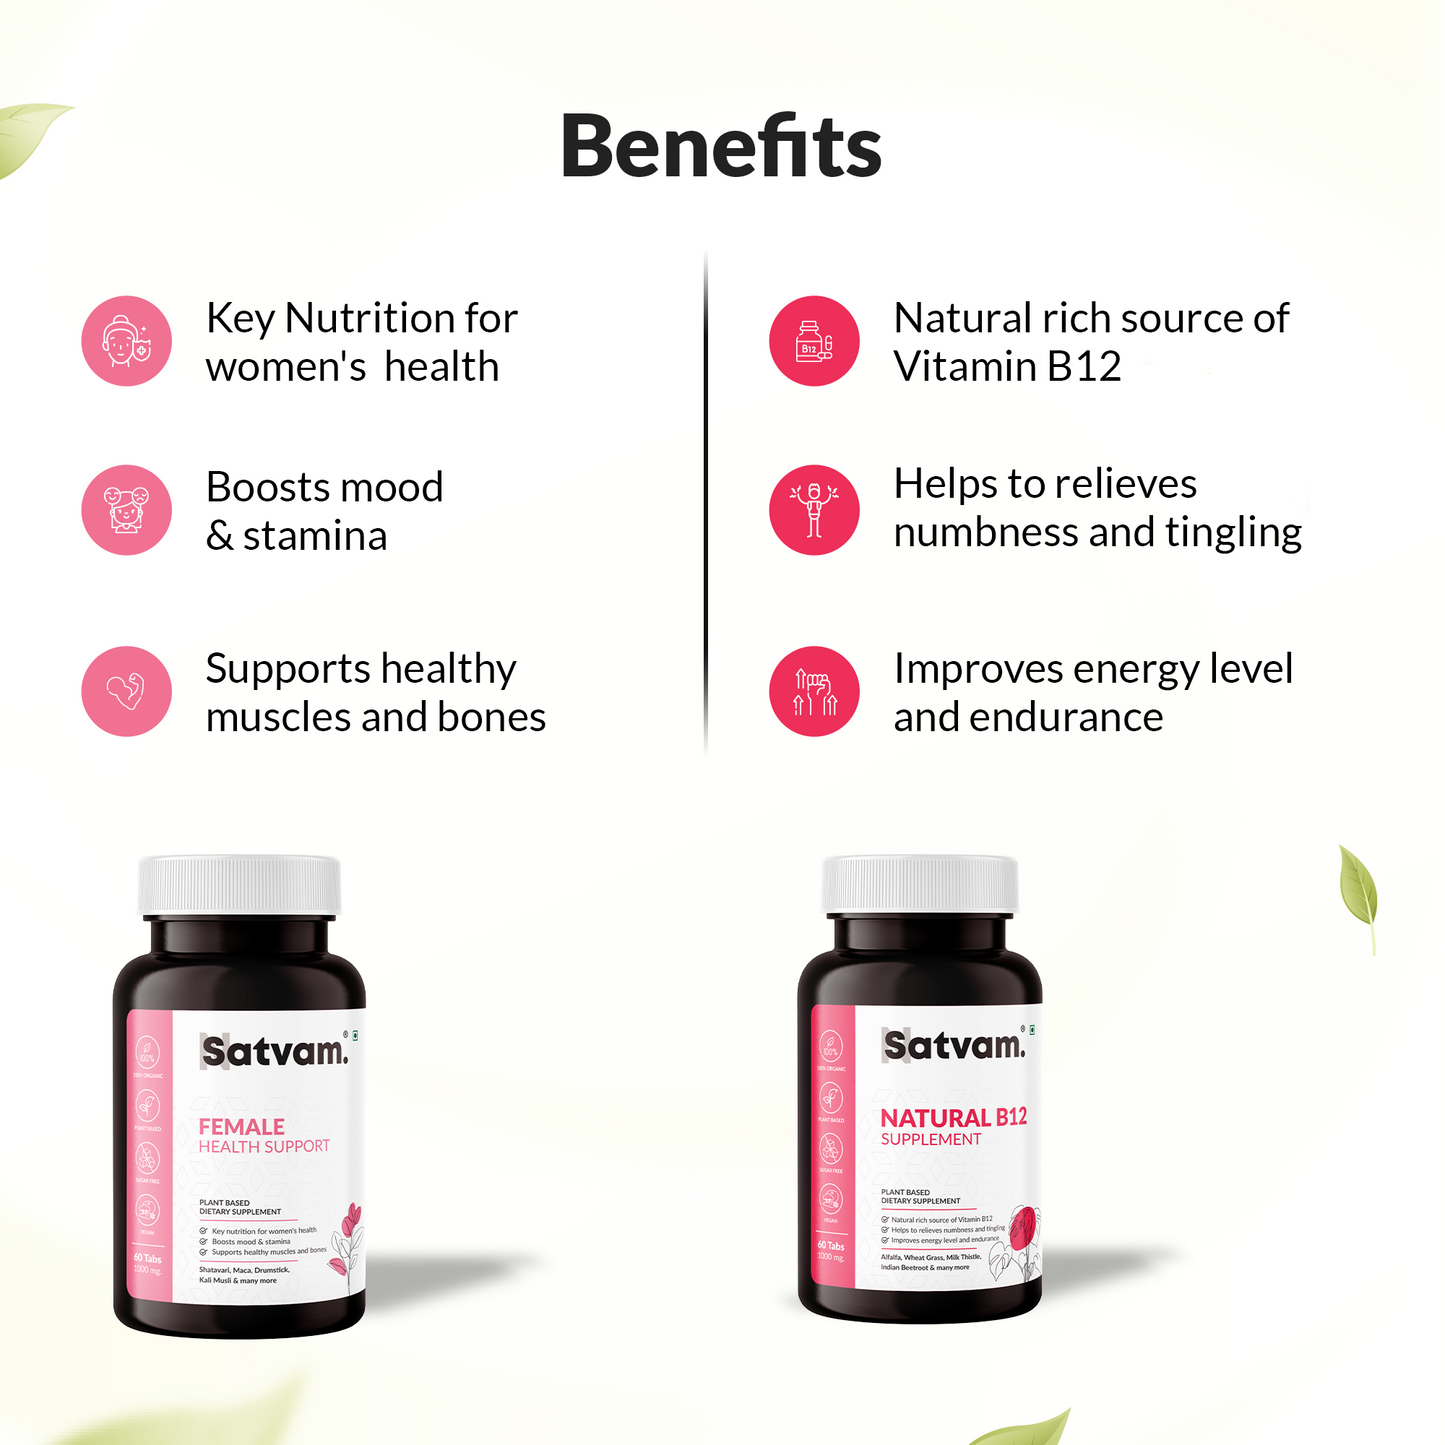 Female Health Support + Natural Vit B12 supplement